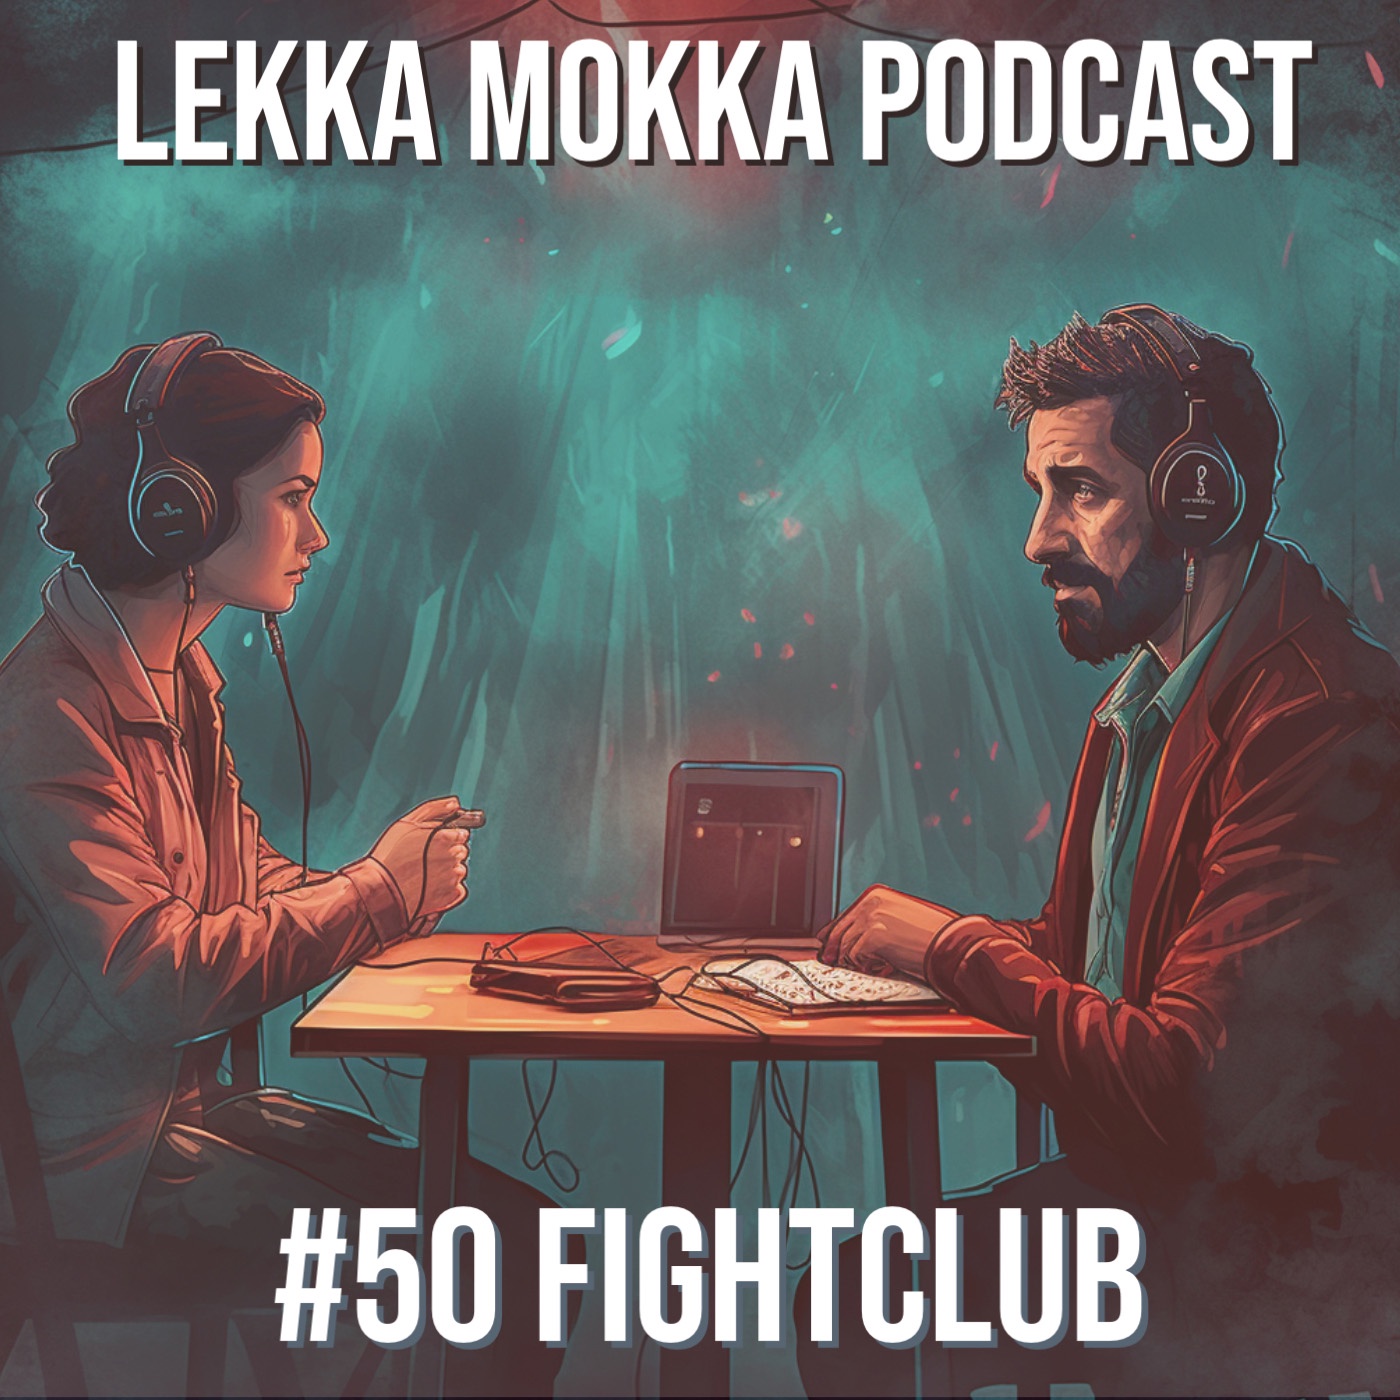 #50 Fightclub